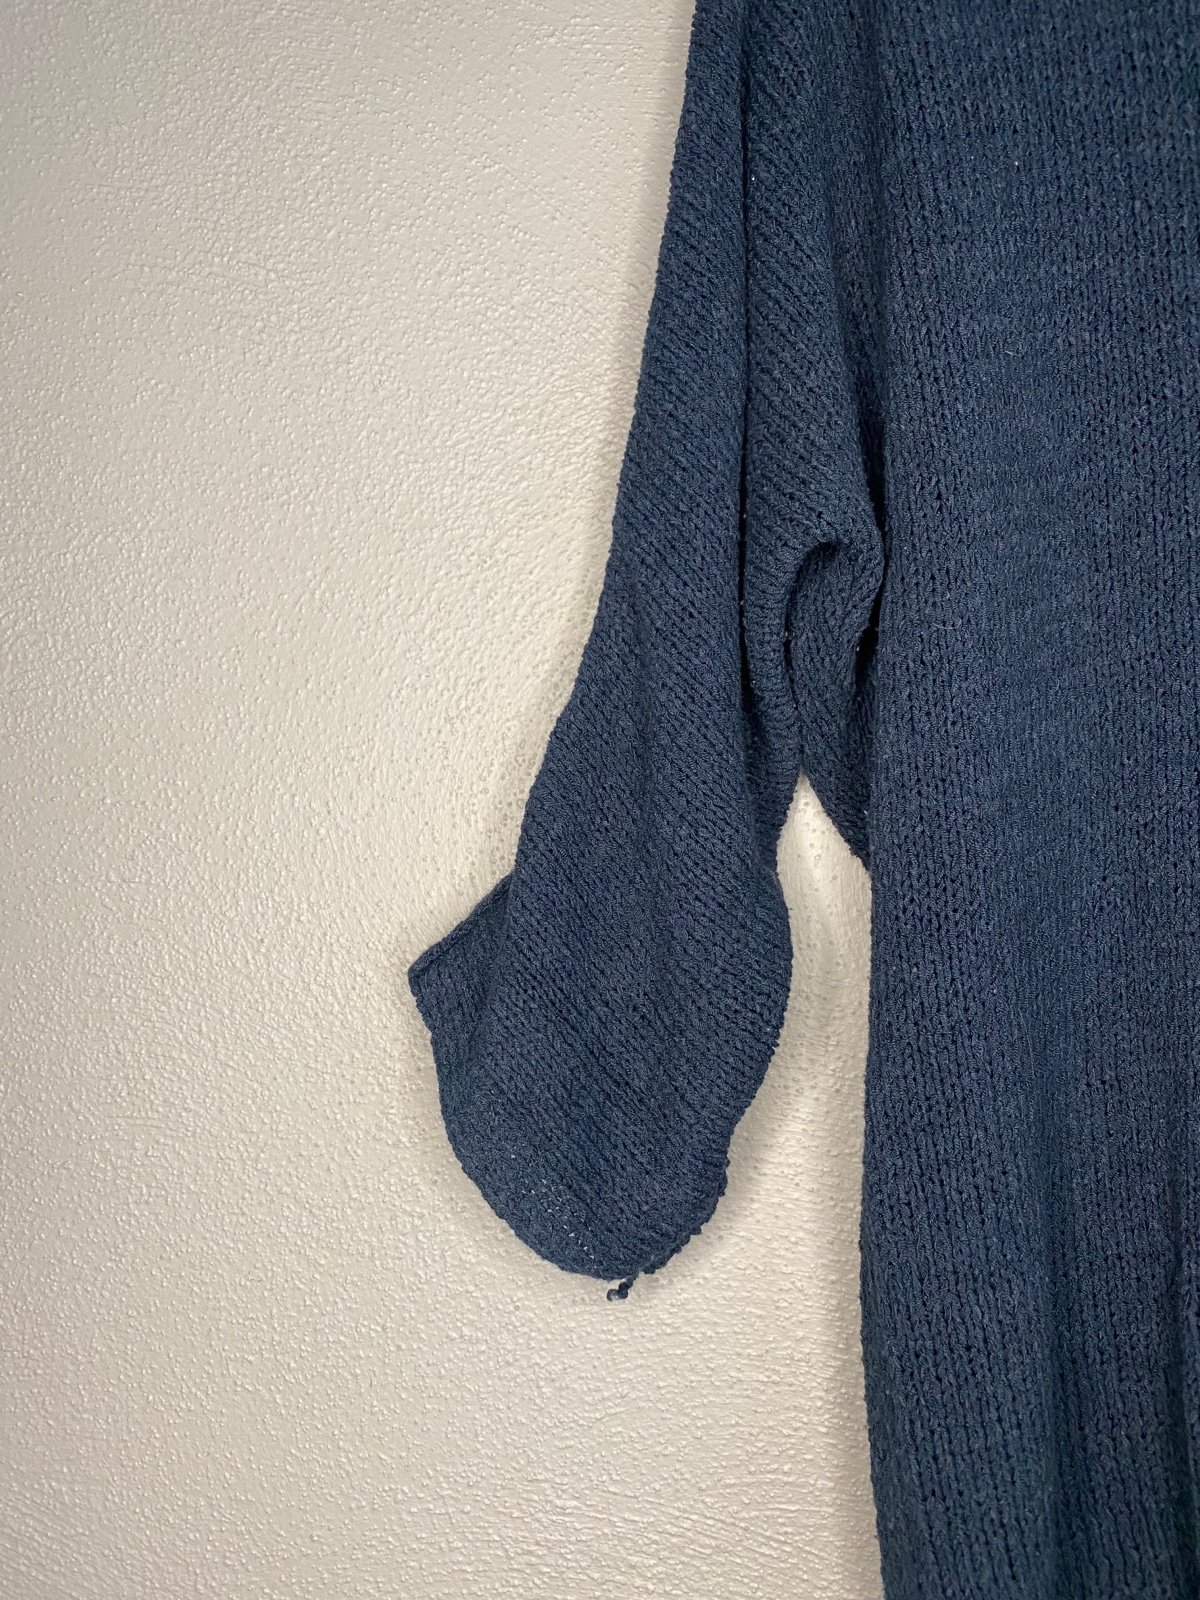 Simple Kiabi Women’s Navy Blue 3/4 Sleeves V Neck Knit Sweater Size S P6yWwbTaS no tax